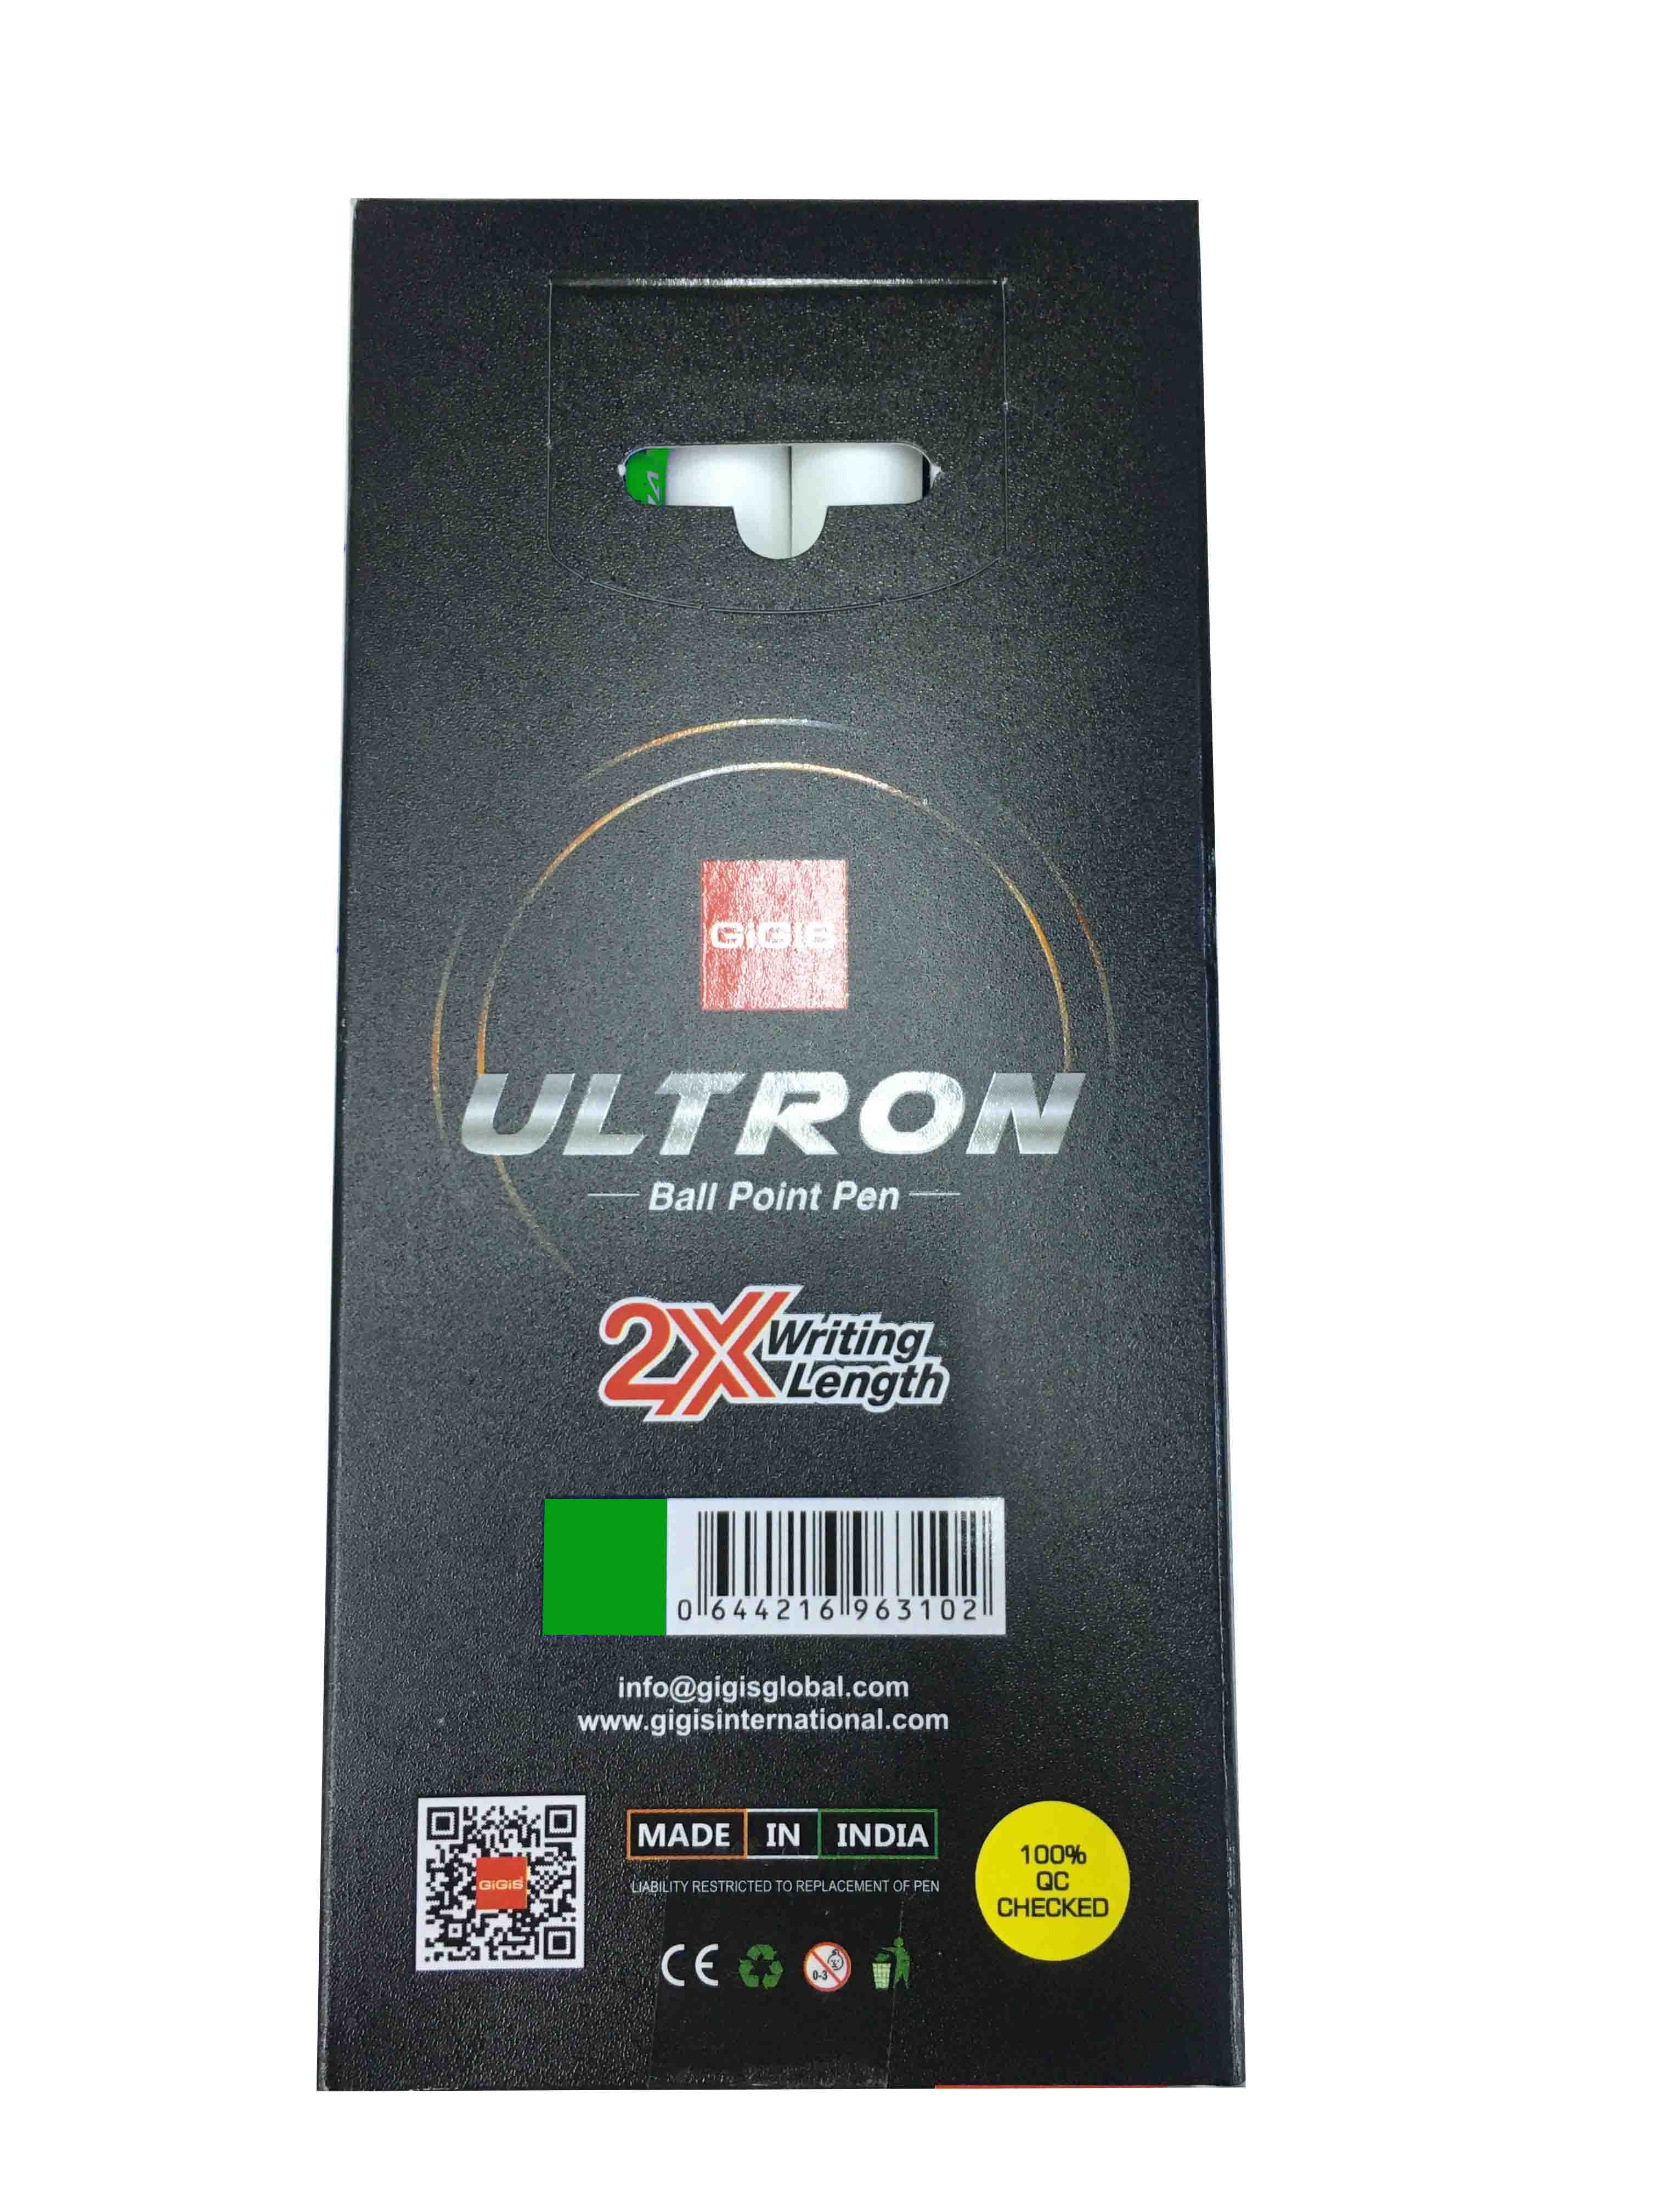 Unimax Pen Gigis Ultron 2x Green 0.7mm PK 12pcs  